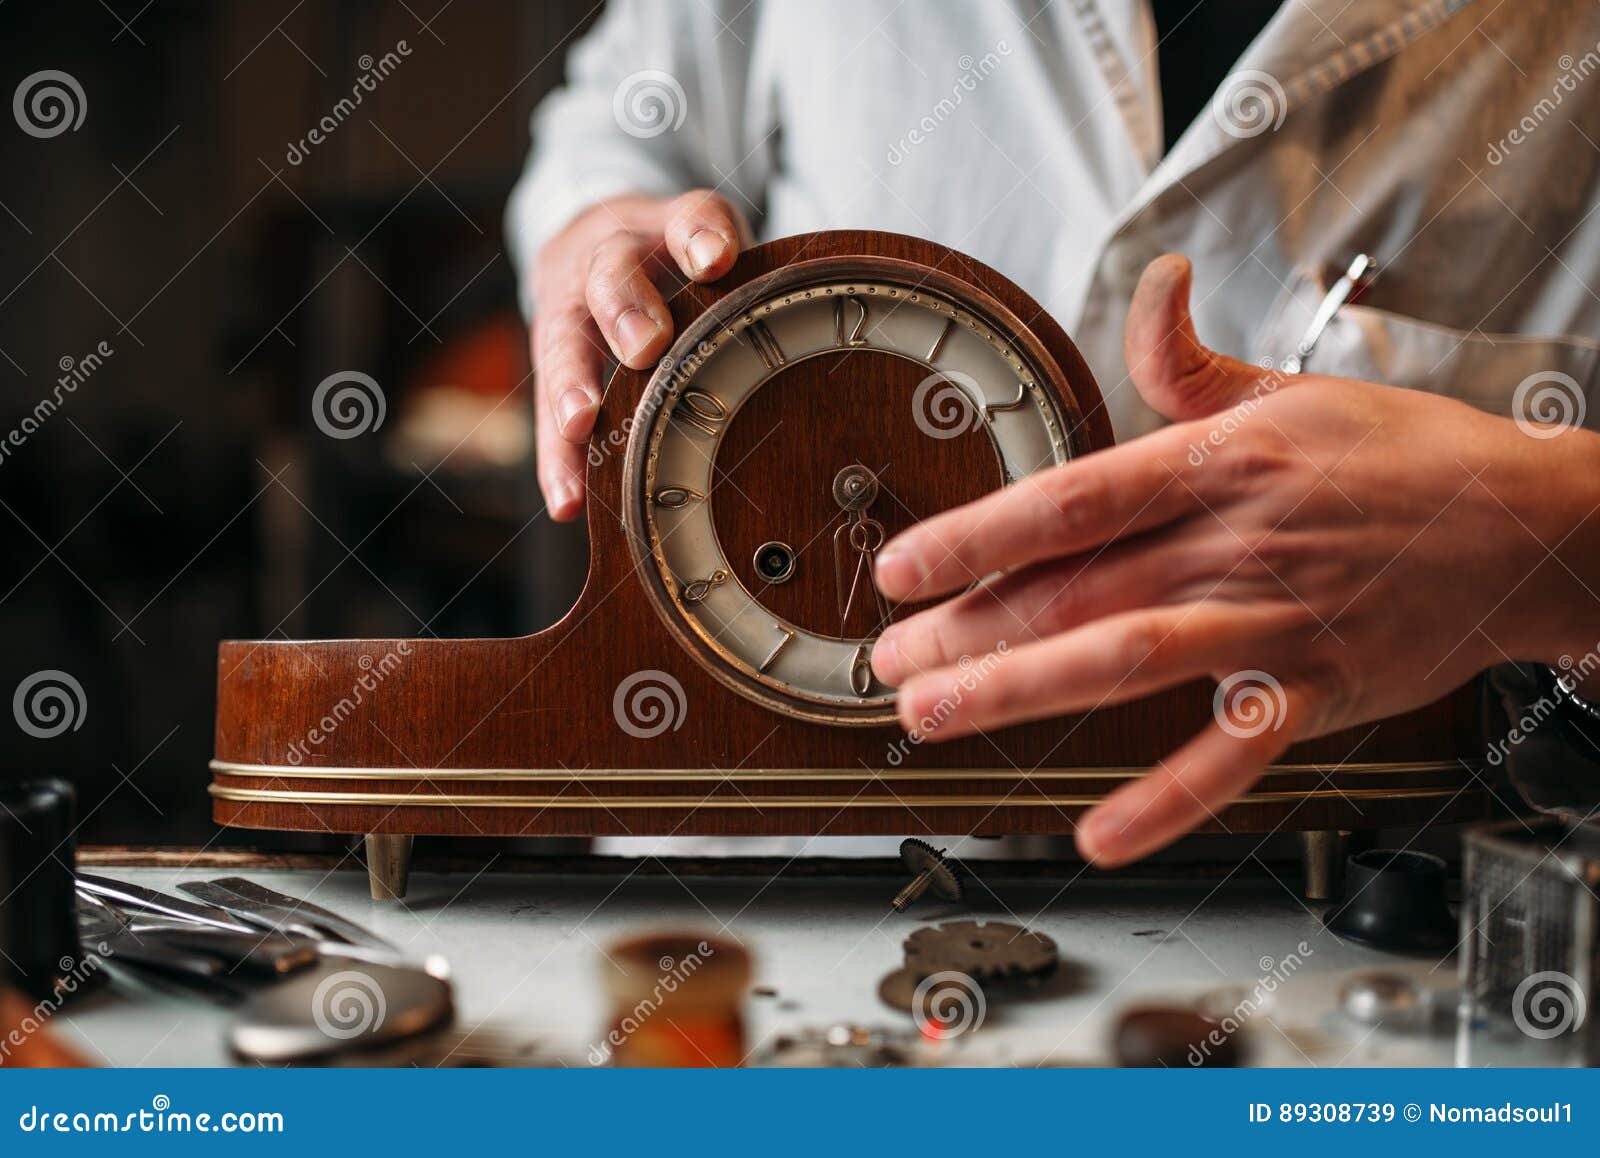 watchmaker restore old wooden table clock